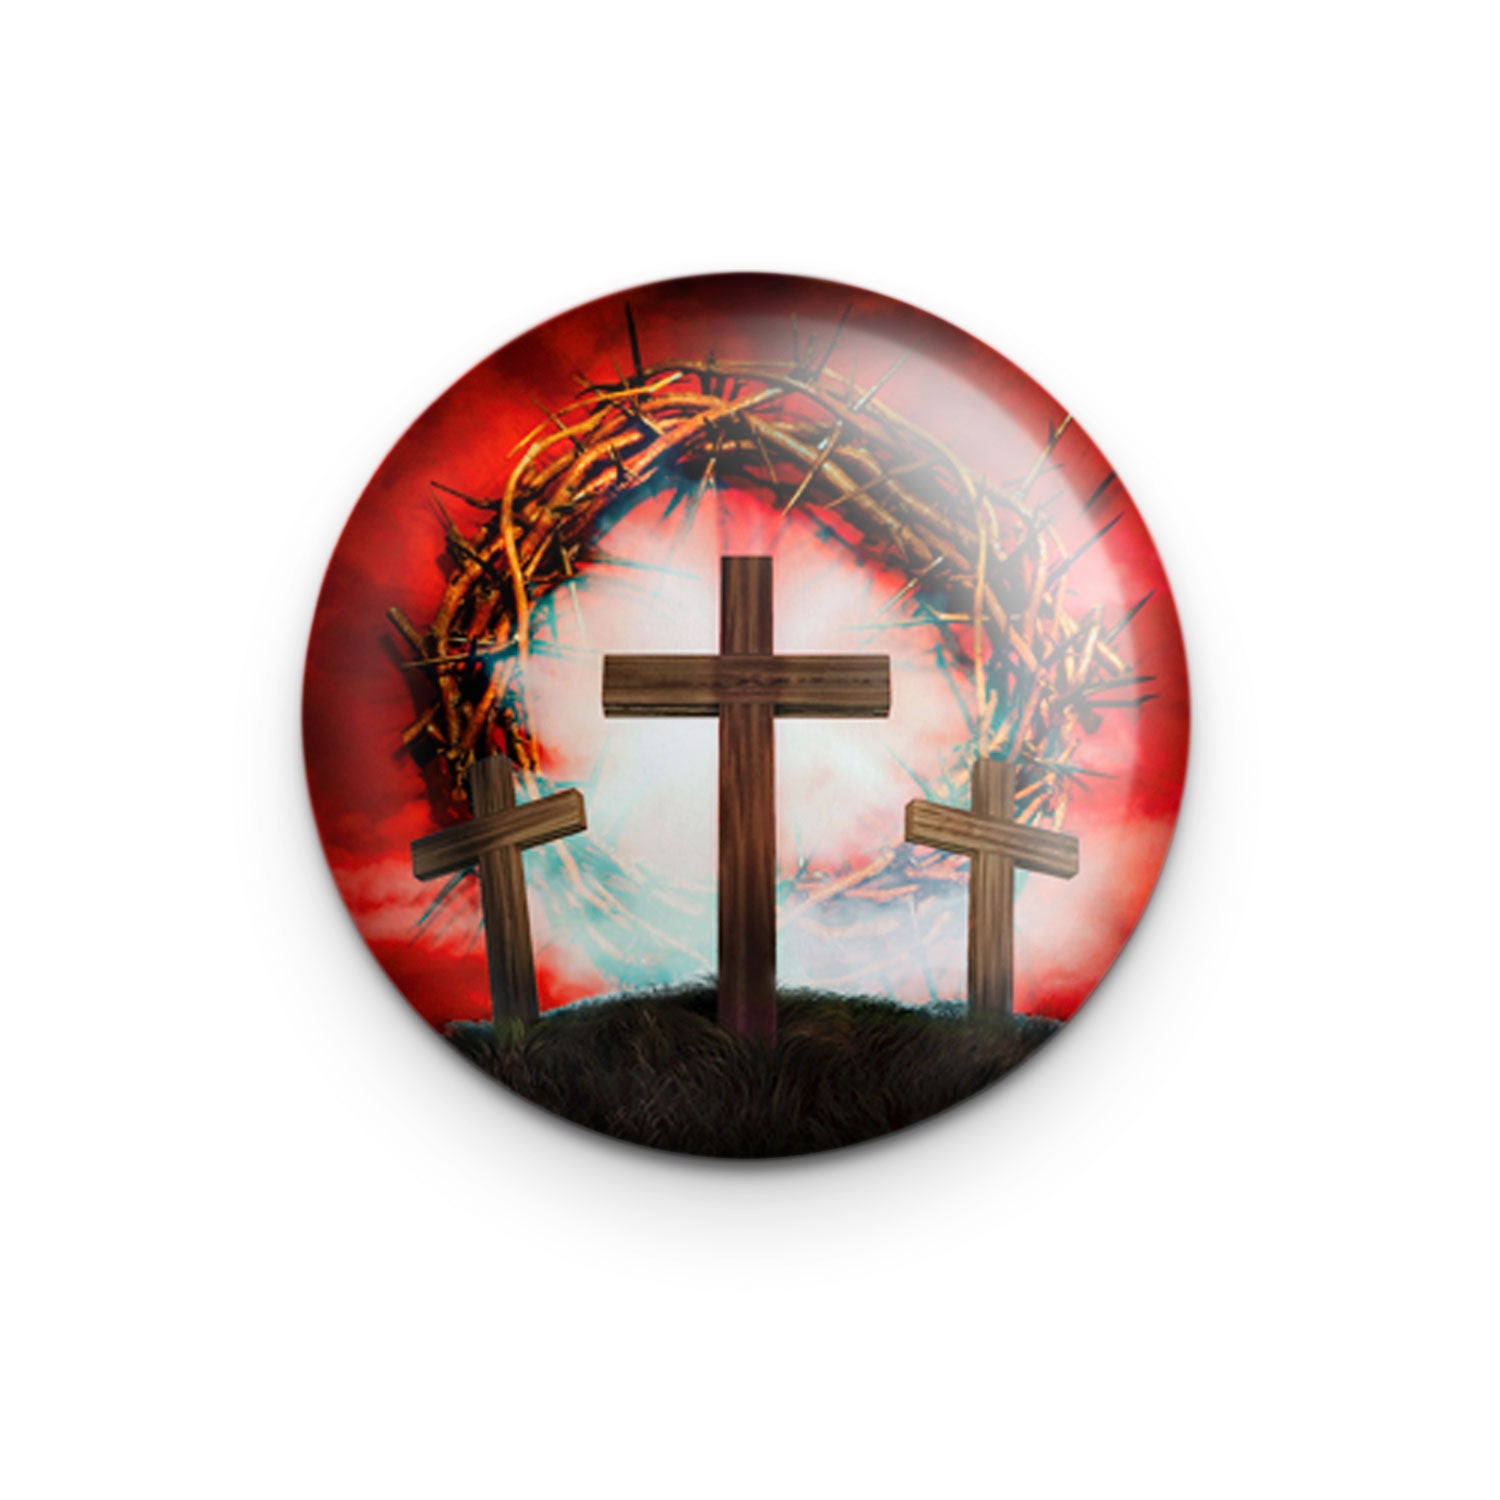 "Three Cross Crown of Thorns" - 1" Round Pinback Button